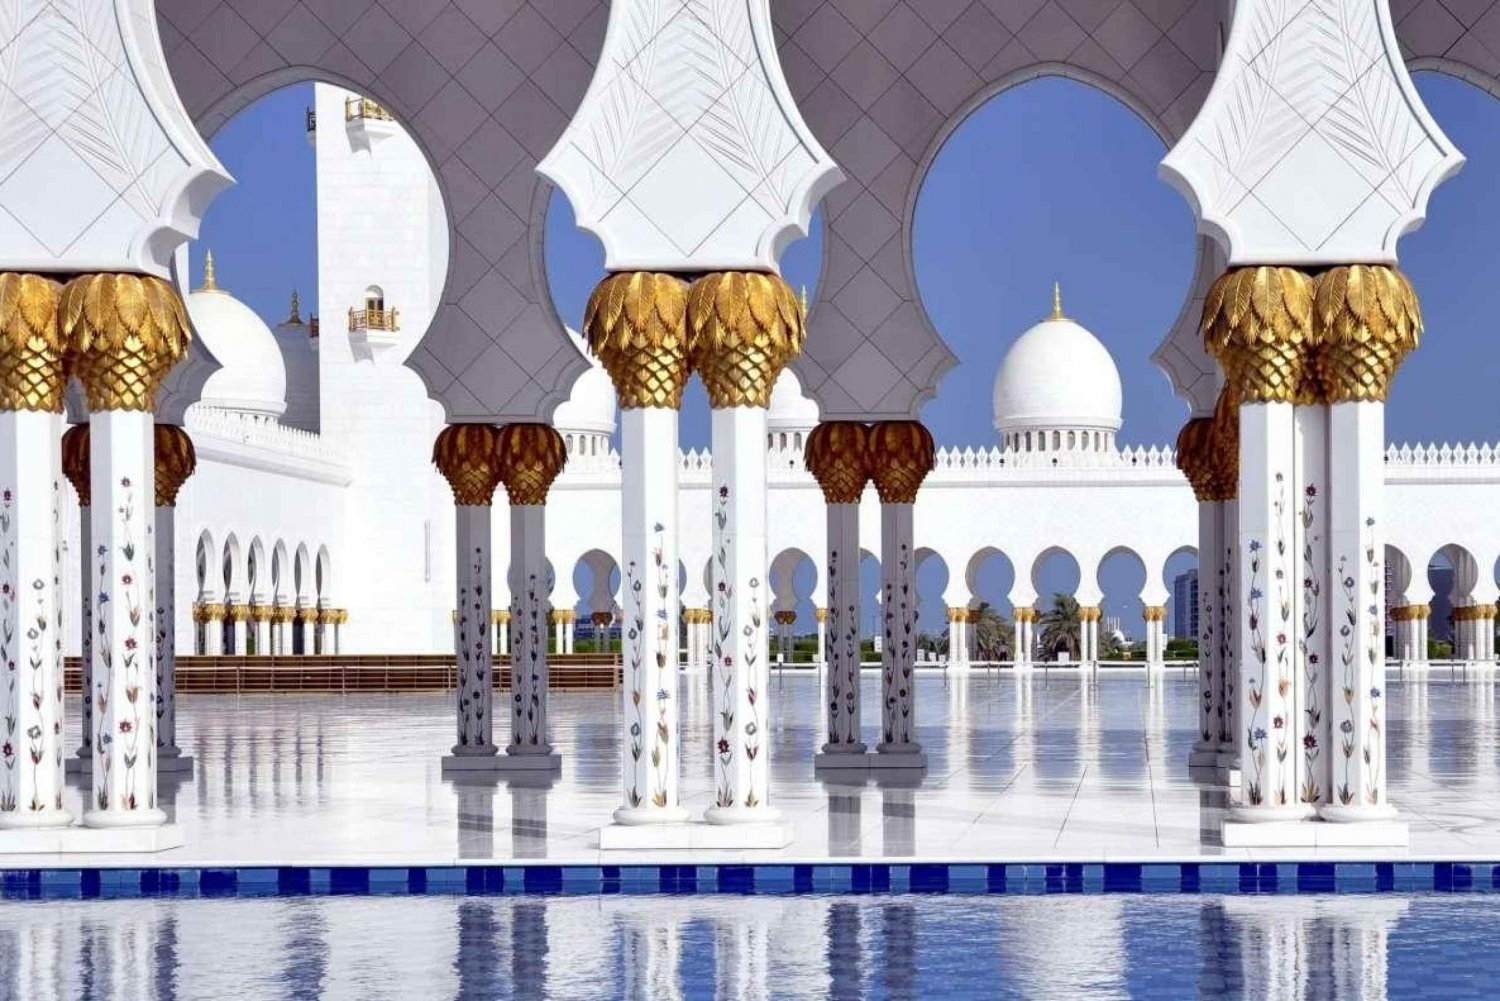 Dubai til Abu Dhabi - moské, paladser, kulturarvstur i SUV